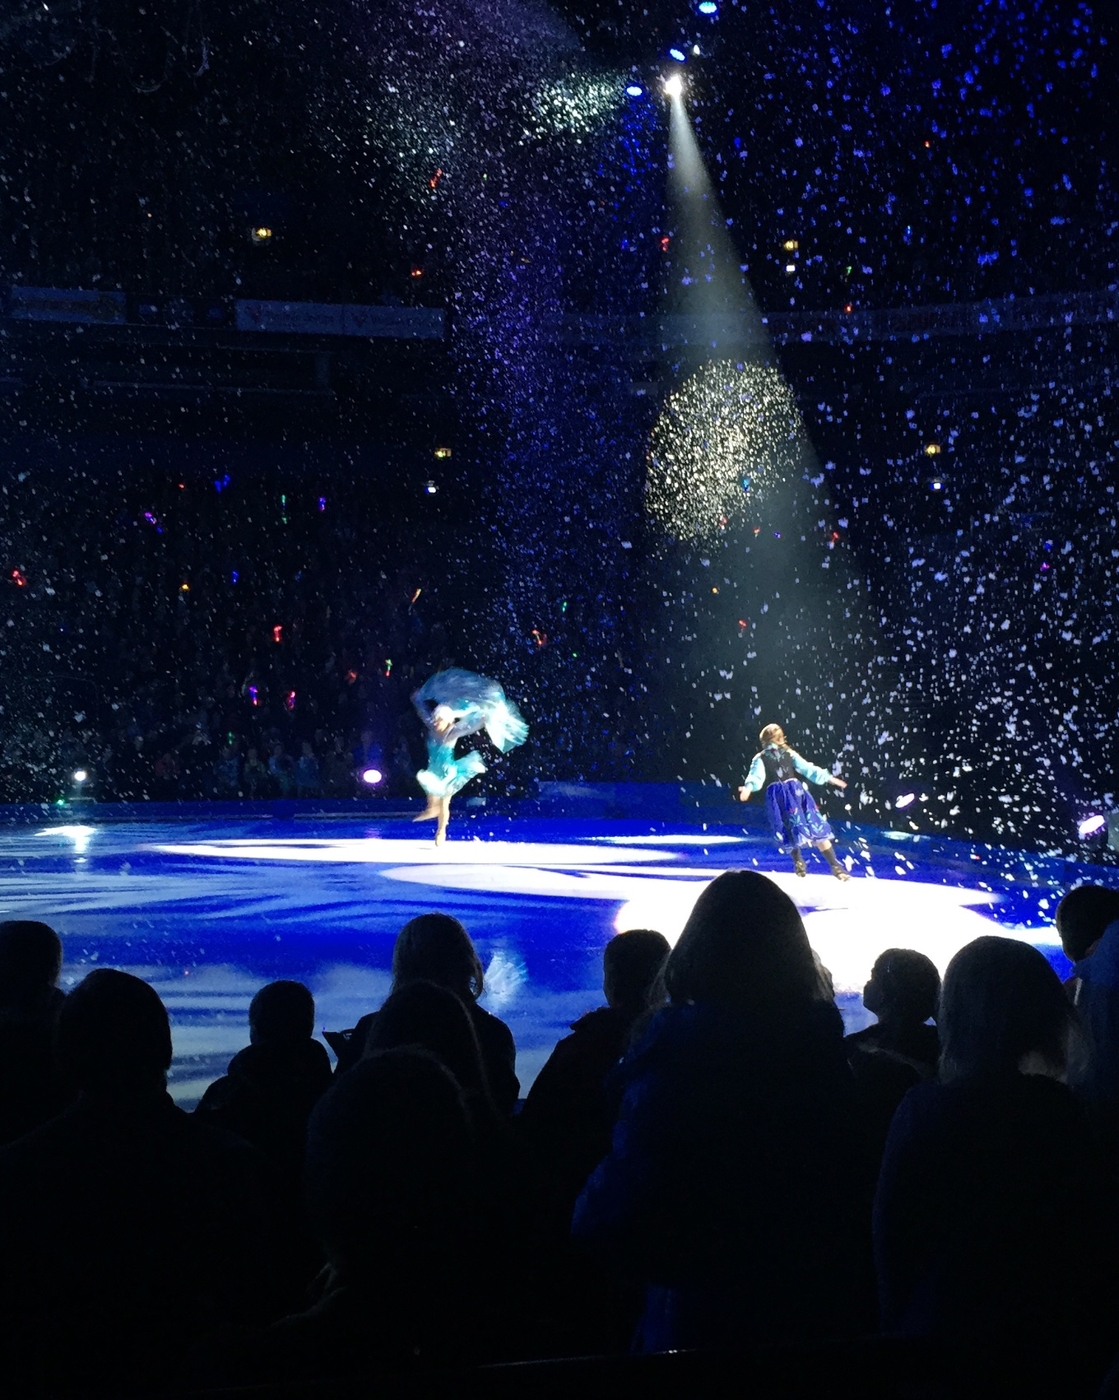 Elsa ja Anna on Ice